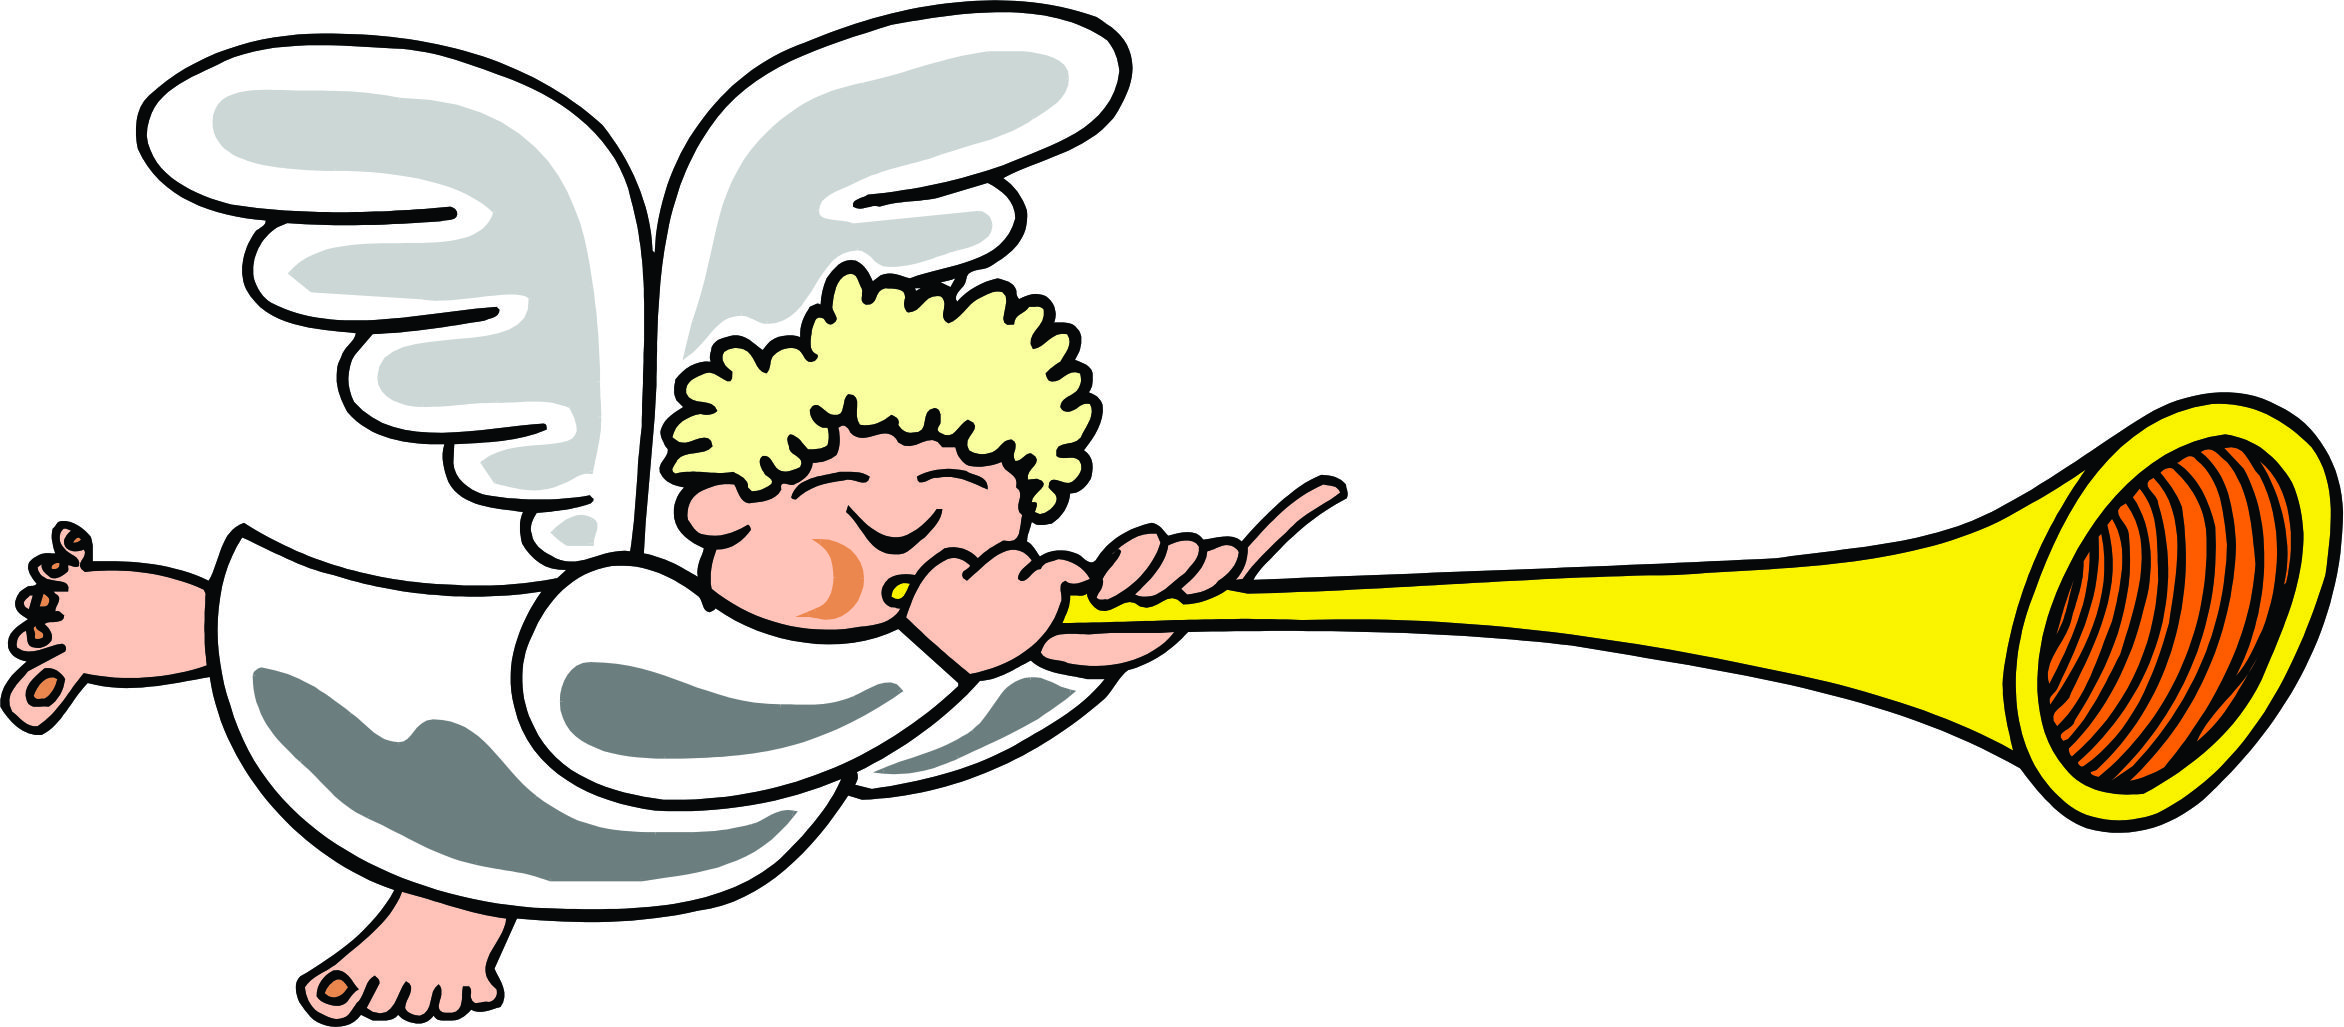 Images Of Cartoon Angels | Free Download Clip Art | Free Clip Art ...